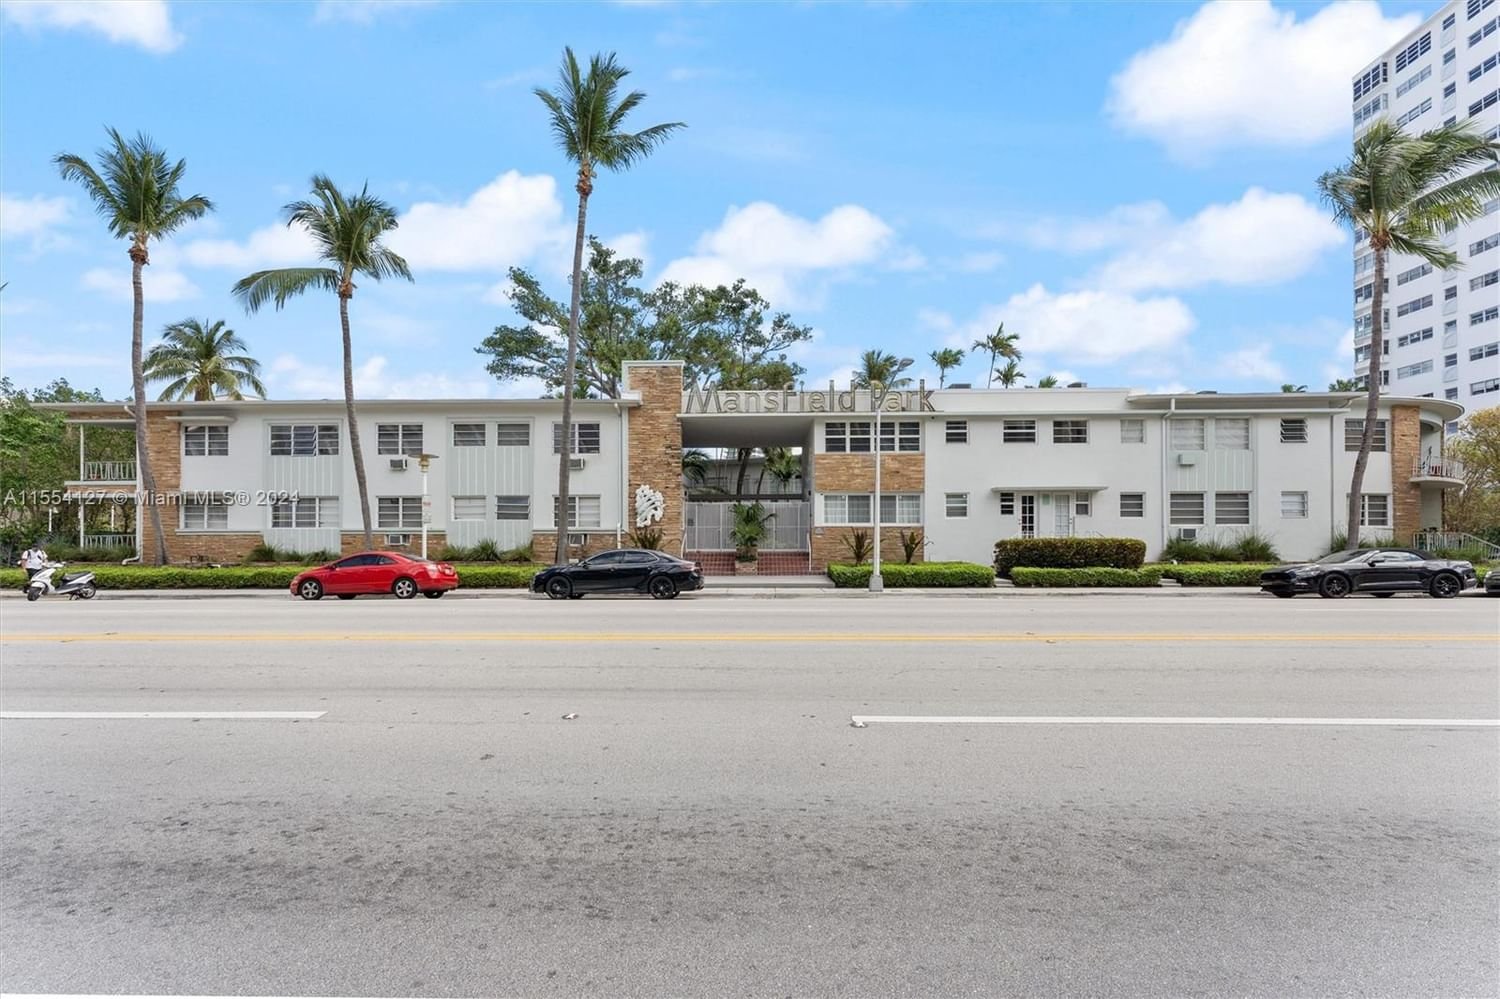 Real estate property located at 1925 Washington Ave #21, Miami-Dade County, MANSFIELD PARK CONDO, Miami Beach, FL